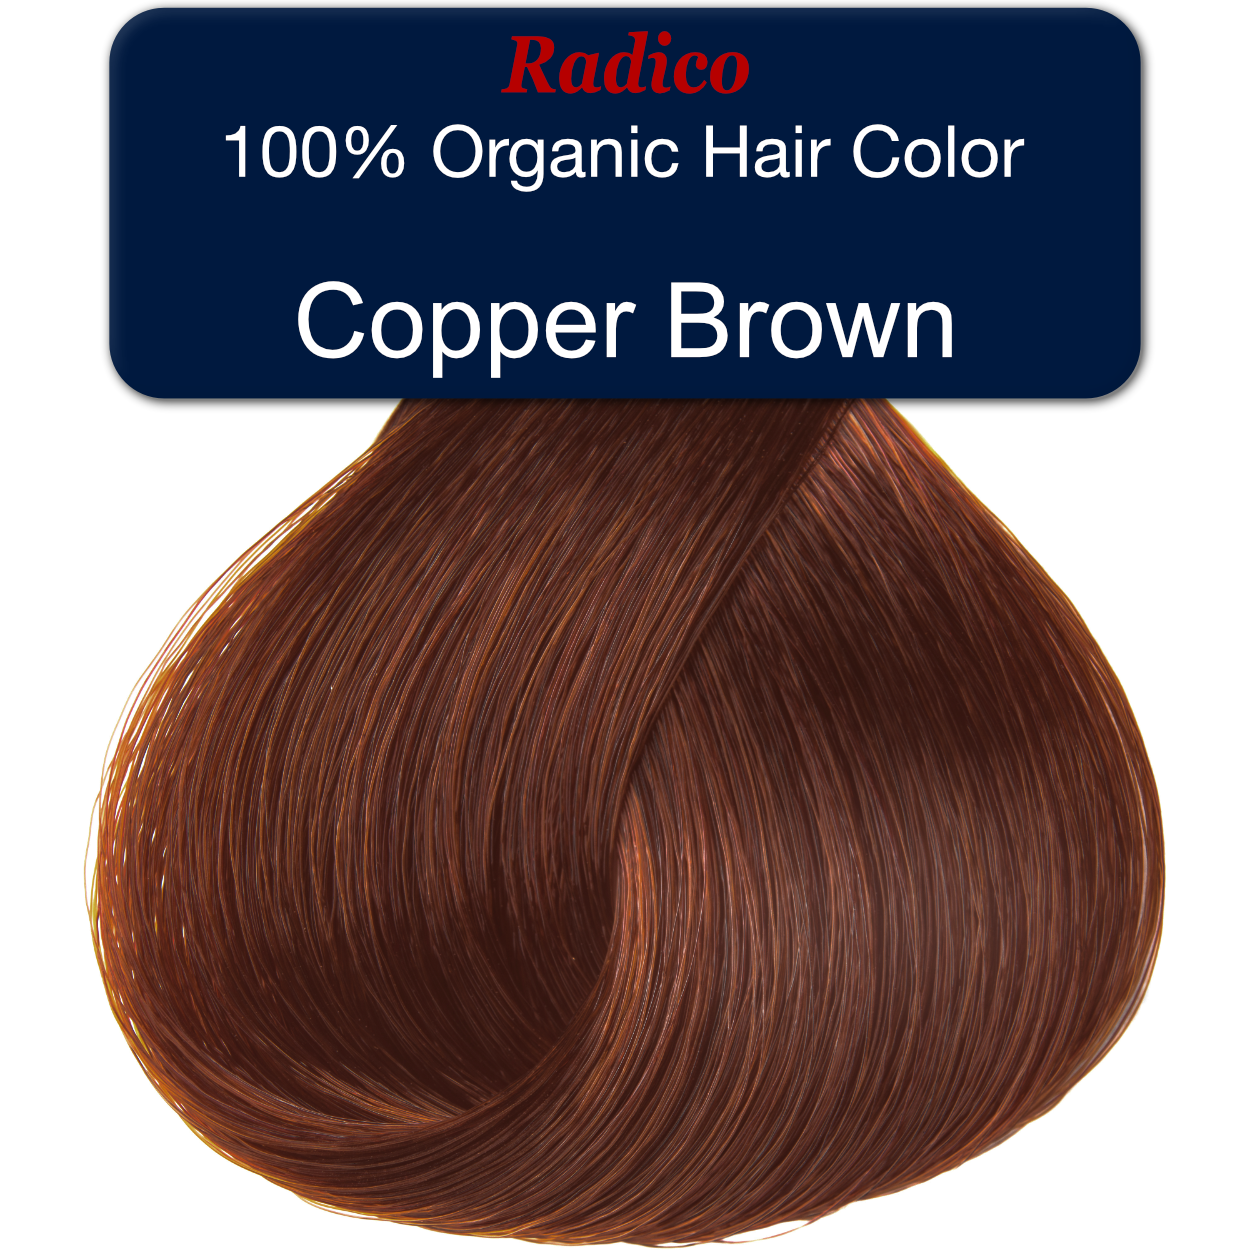 100% Organic hair color. Copper brown hair color sample.